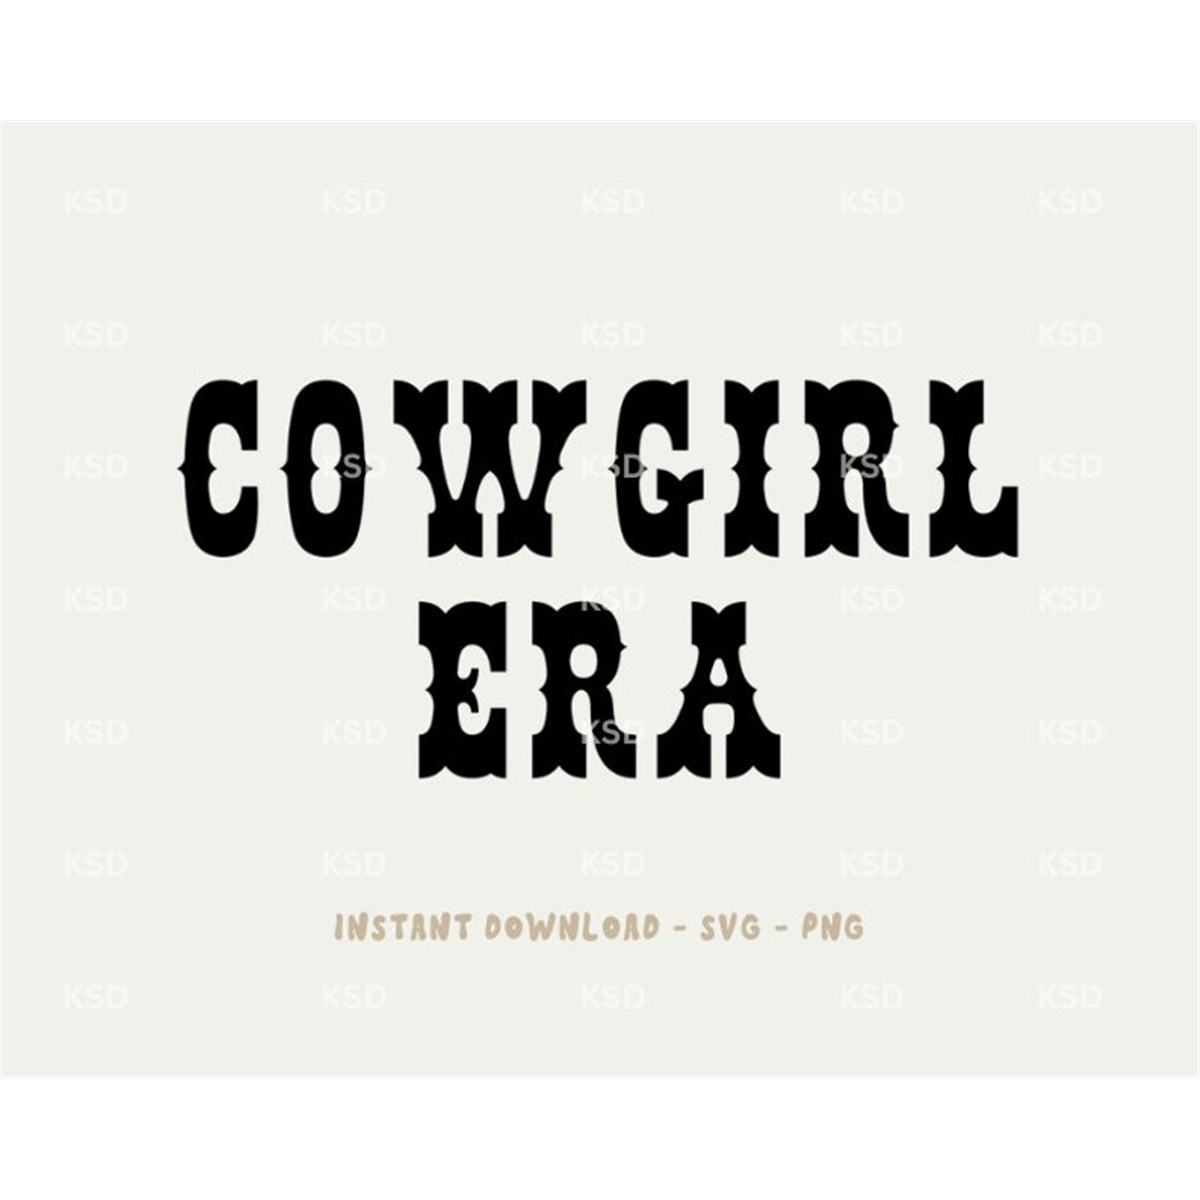 cowgirl-era-svg-png-file-cricut-file-cutting-file-image-1